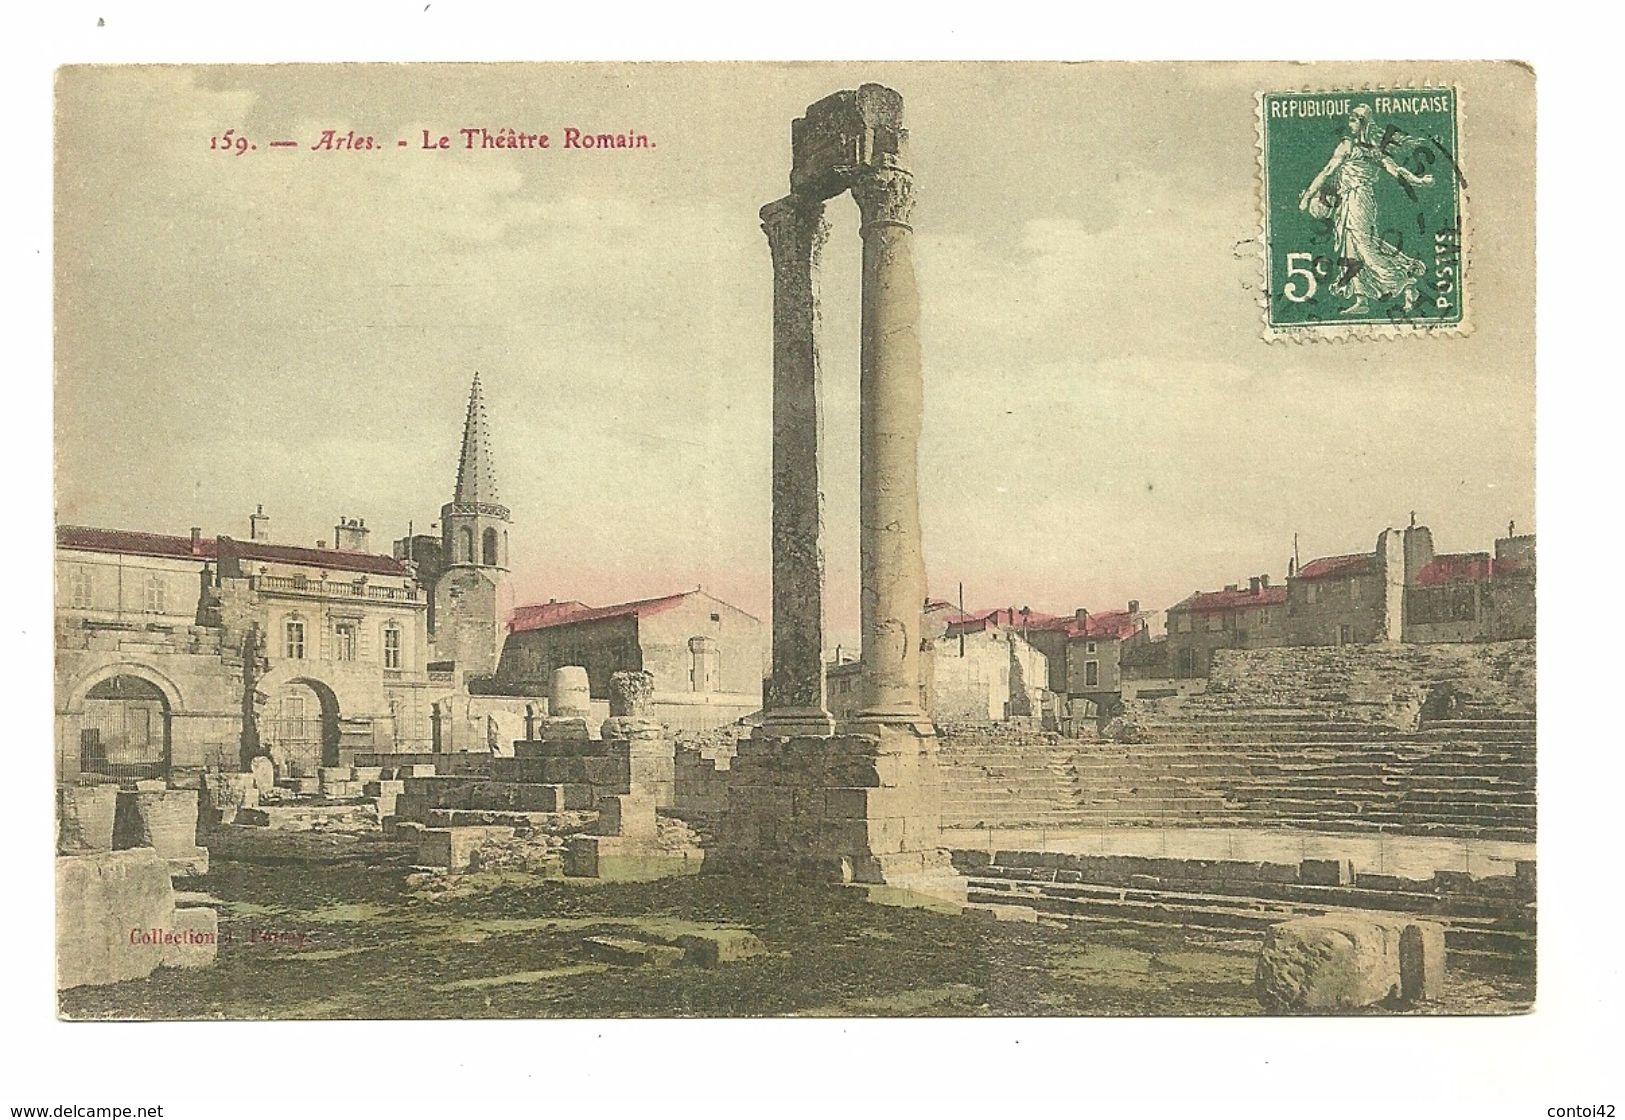 13 ARLES THEATRE ROMAIN  COLLECTION POIREY BOUCHES DU RHONE - Arles